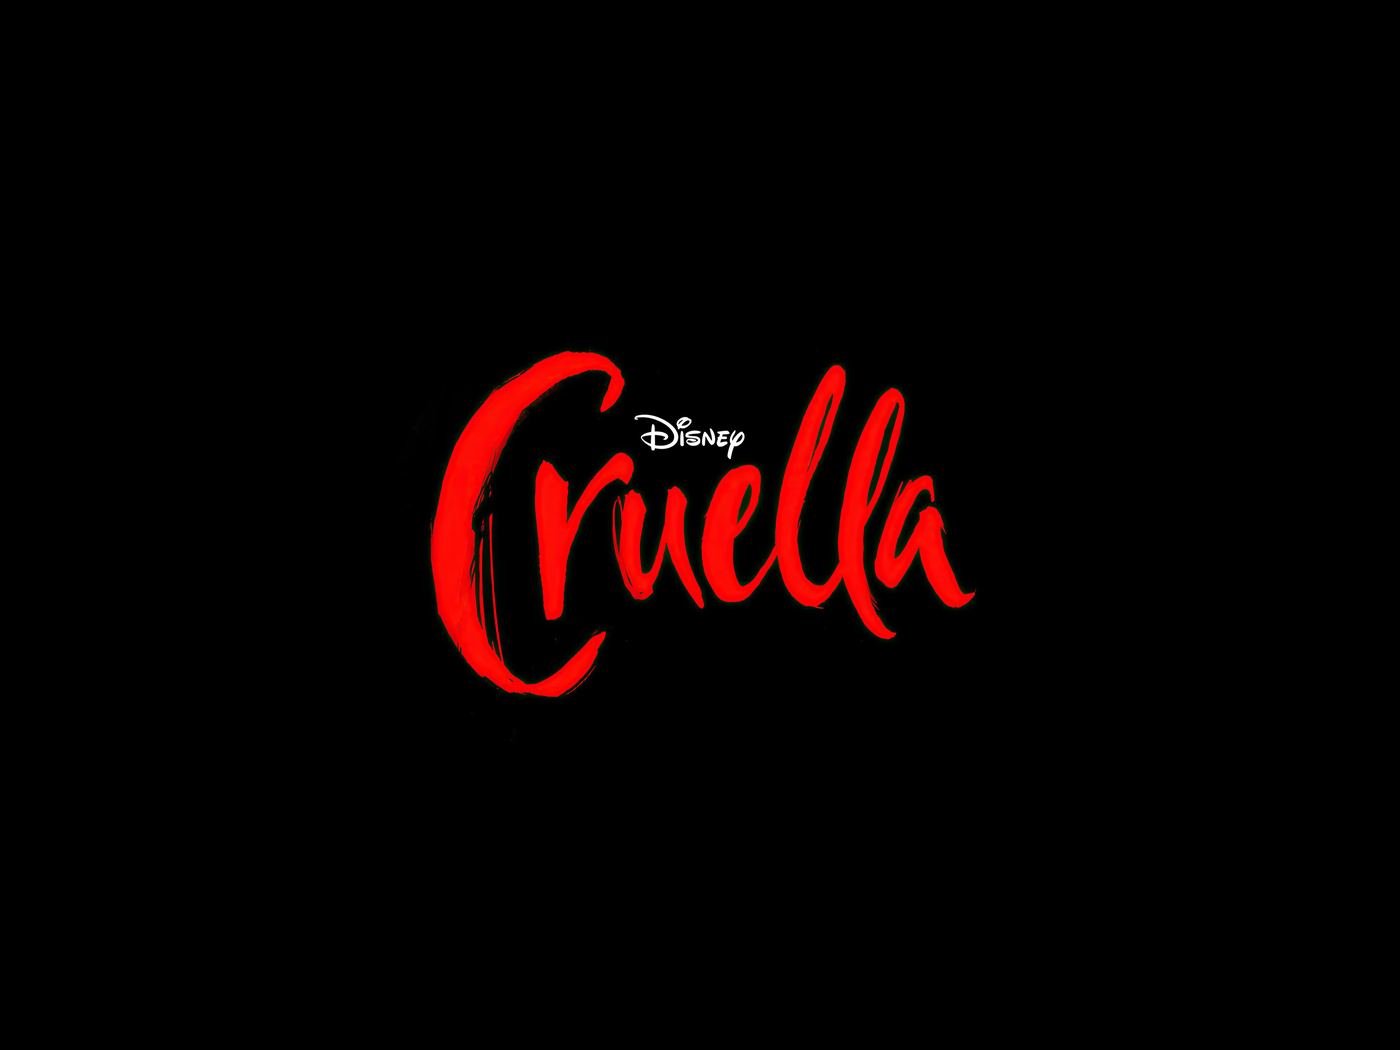 cruella-movie-logo-4k-mw.jpg